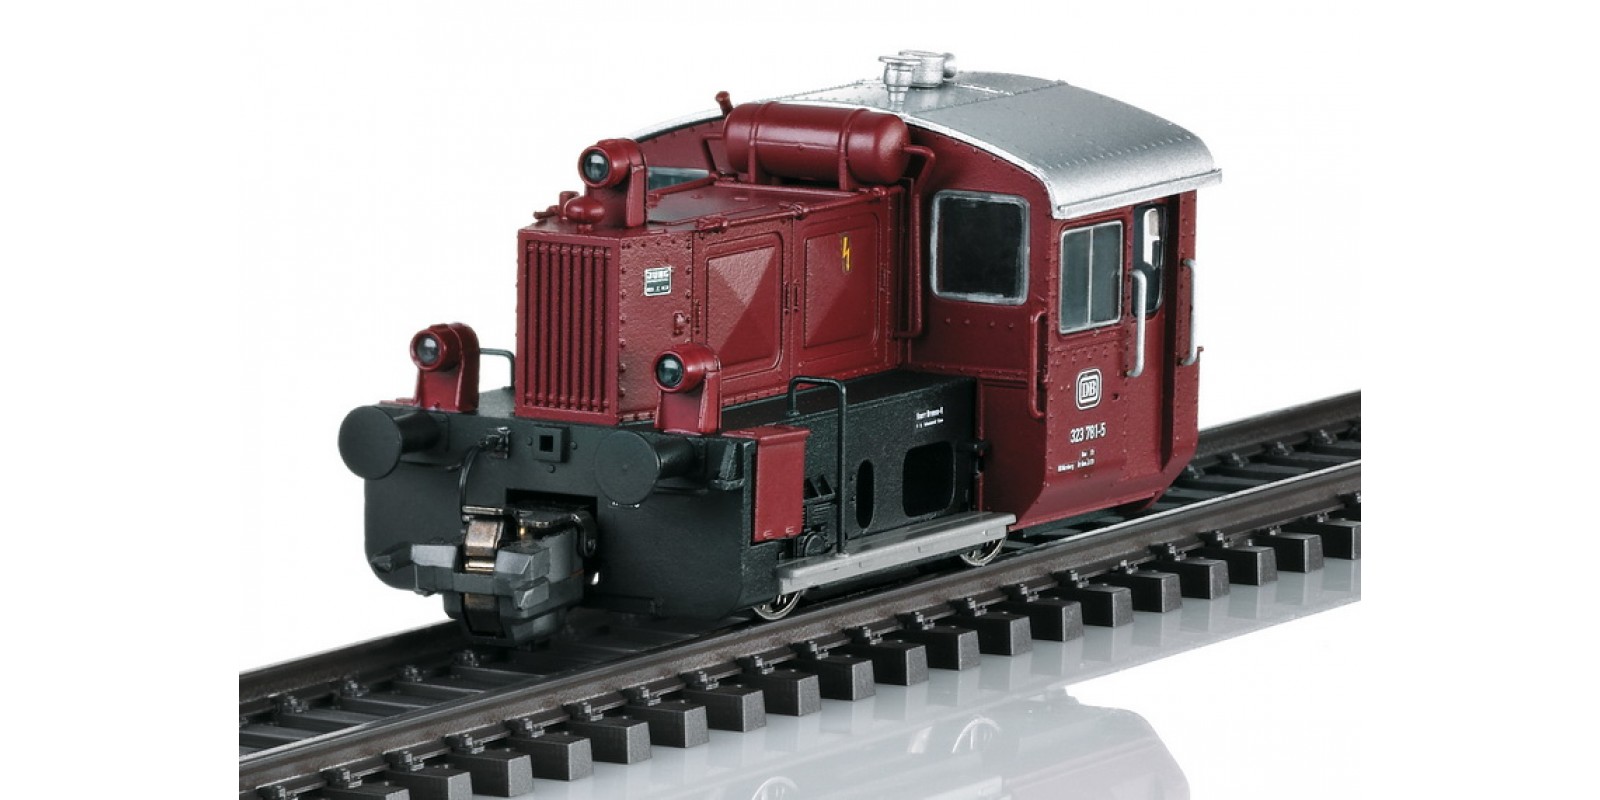 T22308  Class 323 Diesel Locomotive